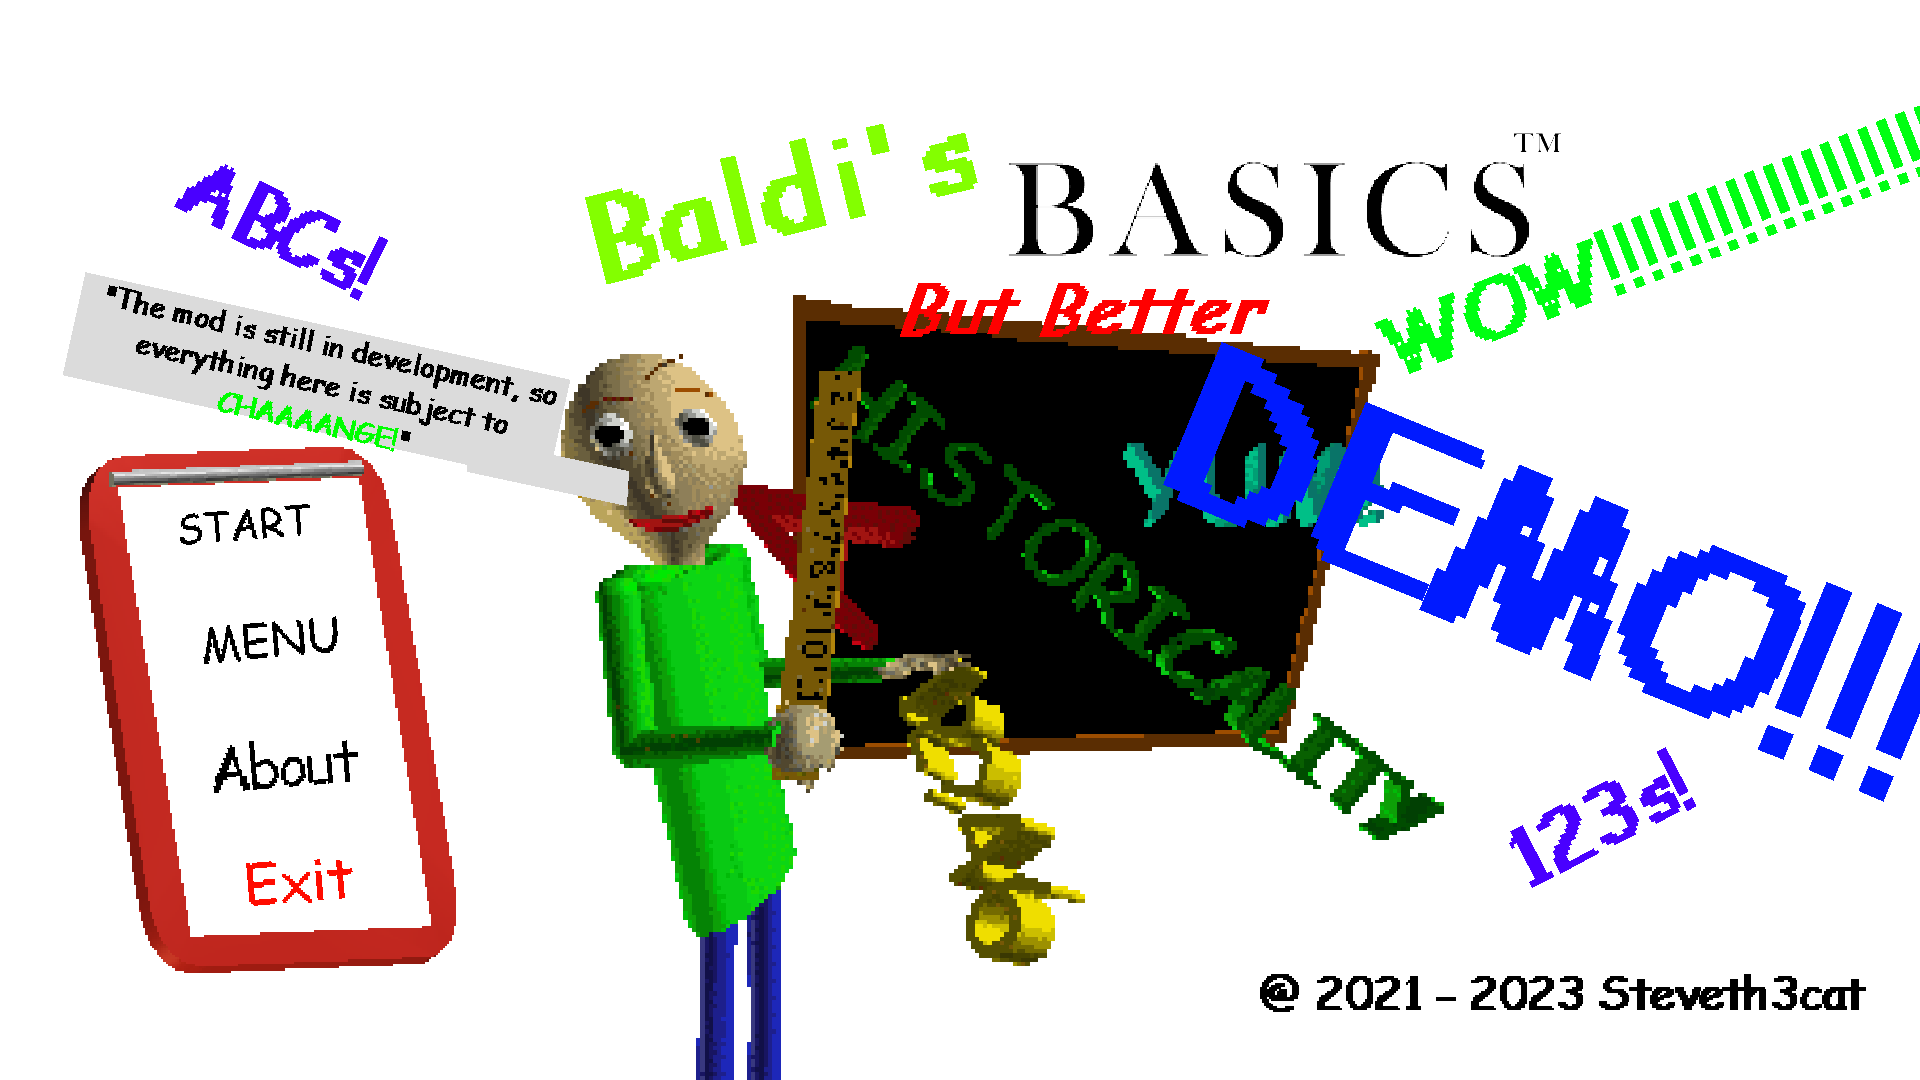 Baldi's basics but better DEMO